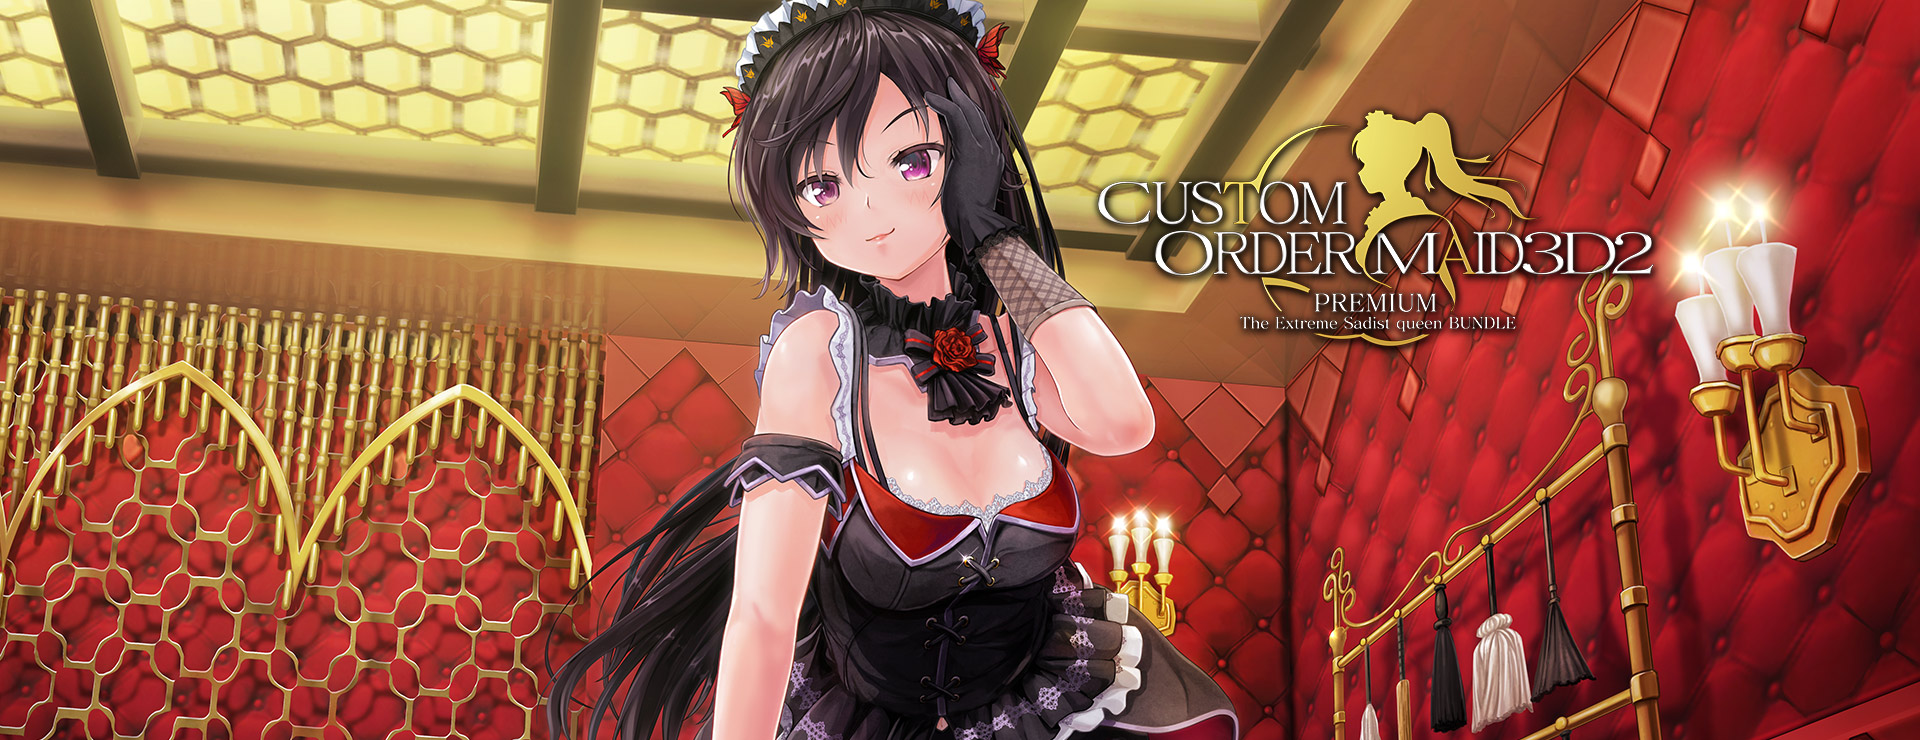 Custom Order Maid 3D2: Extreme Sadist Queen Bundle - Simulation Game